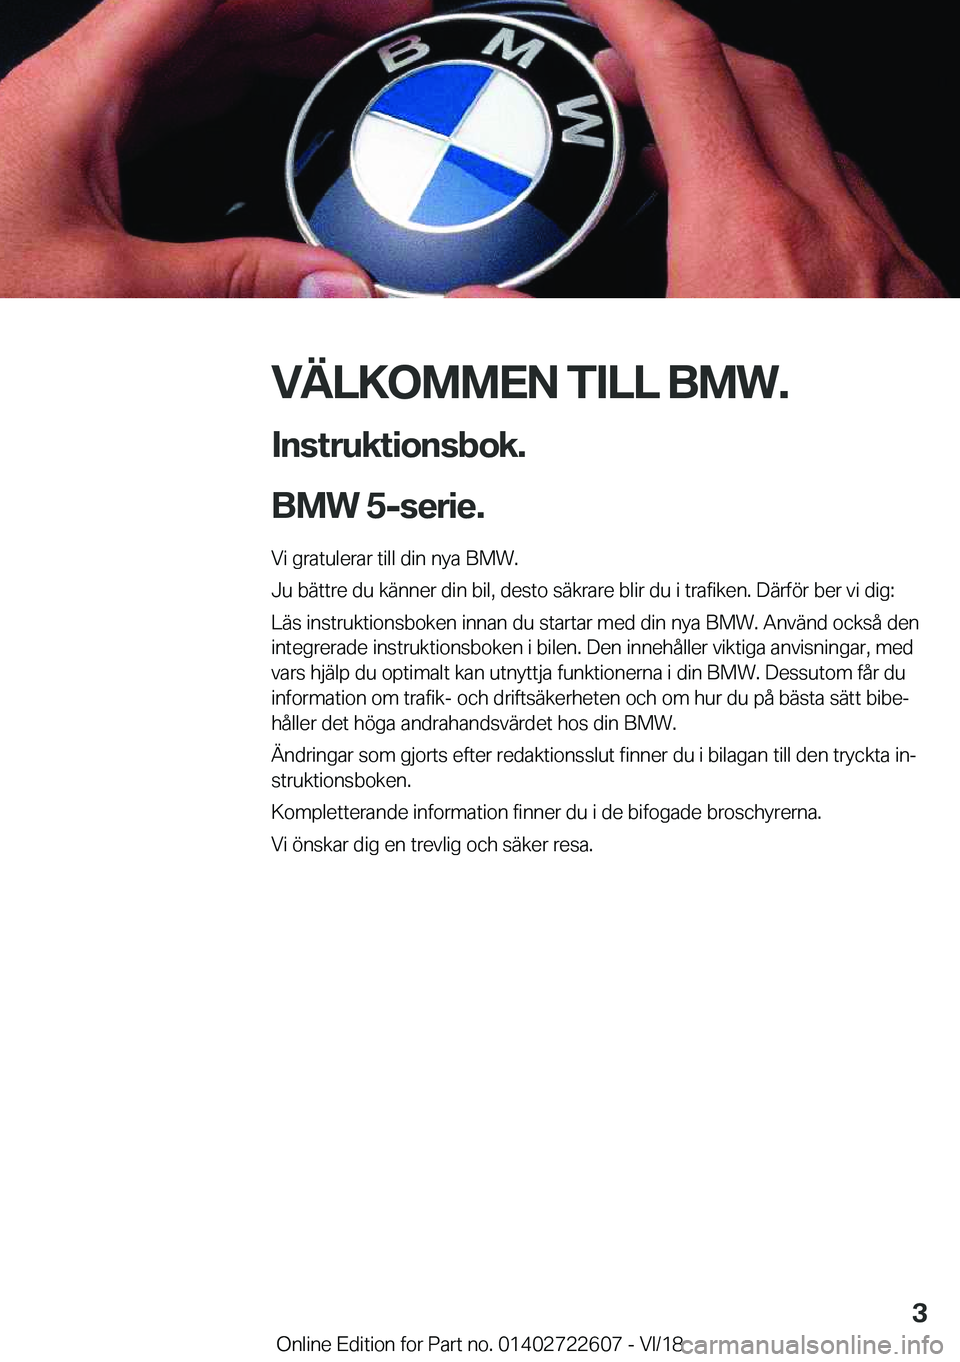 BMW 5 SERIES 2019  InstruktionsbÖcker (in Swedish) �V�Ä�L�K�O�M�M�E�N��T�I�L�L��B�M�W�.�I�n�s�t�r�u�k�t�i�o�n�s�b�o�k�.
�B�M�W��5�-�s�e�r�i�e�.
�V�i��g�r�a�t�u�l�e�r�a�r��t�i�l�l��d�i�n��n�y�a��B�M�W�.
�J�u��b�ä�t�t�r�e��d�u��k�ä�n�n�e�r